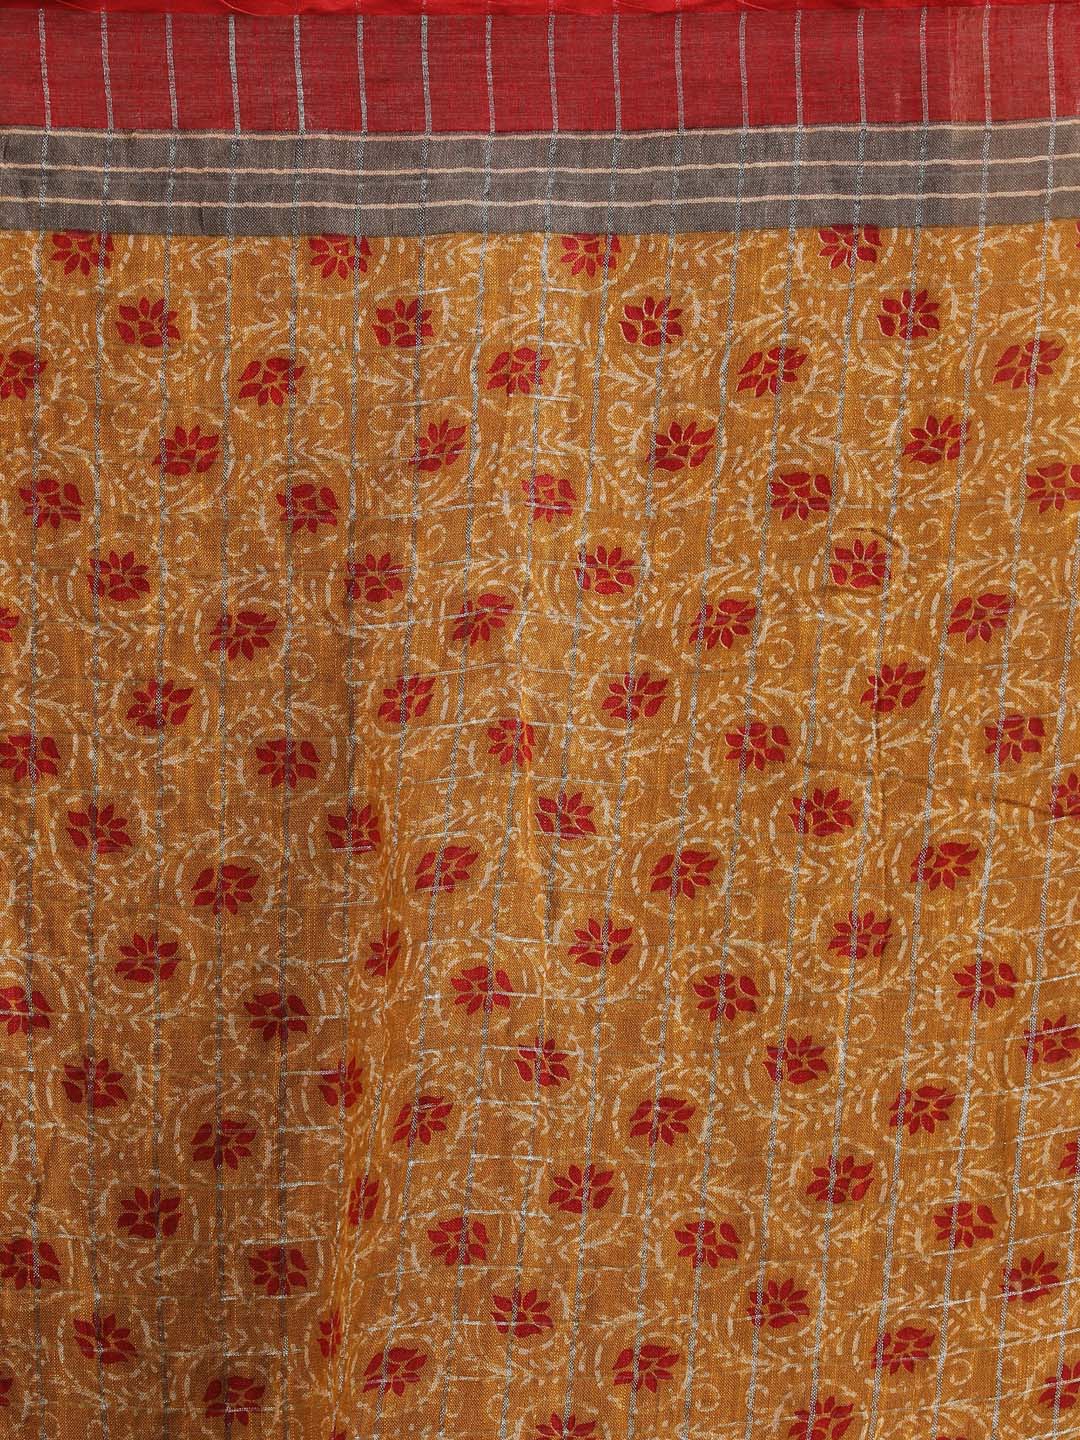 Indethnic Yellow Liva Printed Saree - Saree Detail View